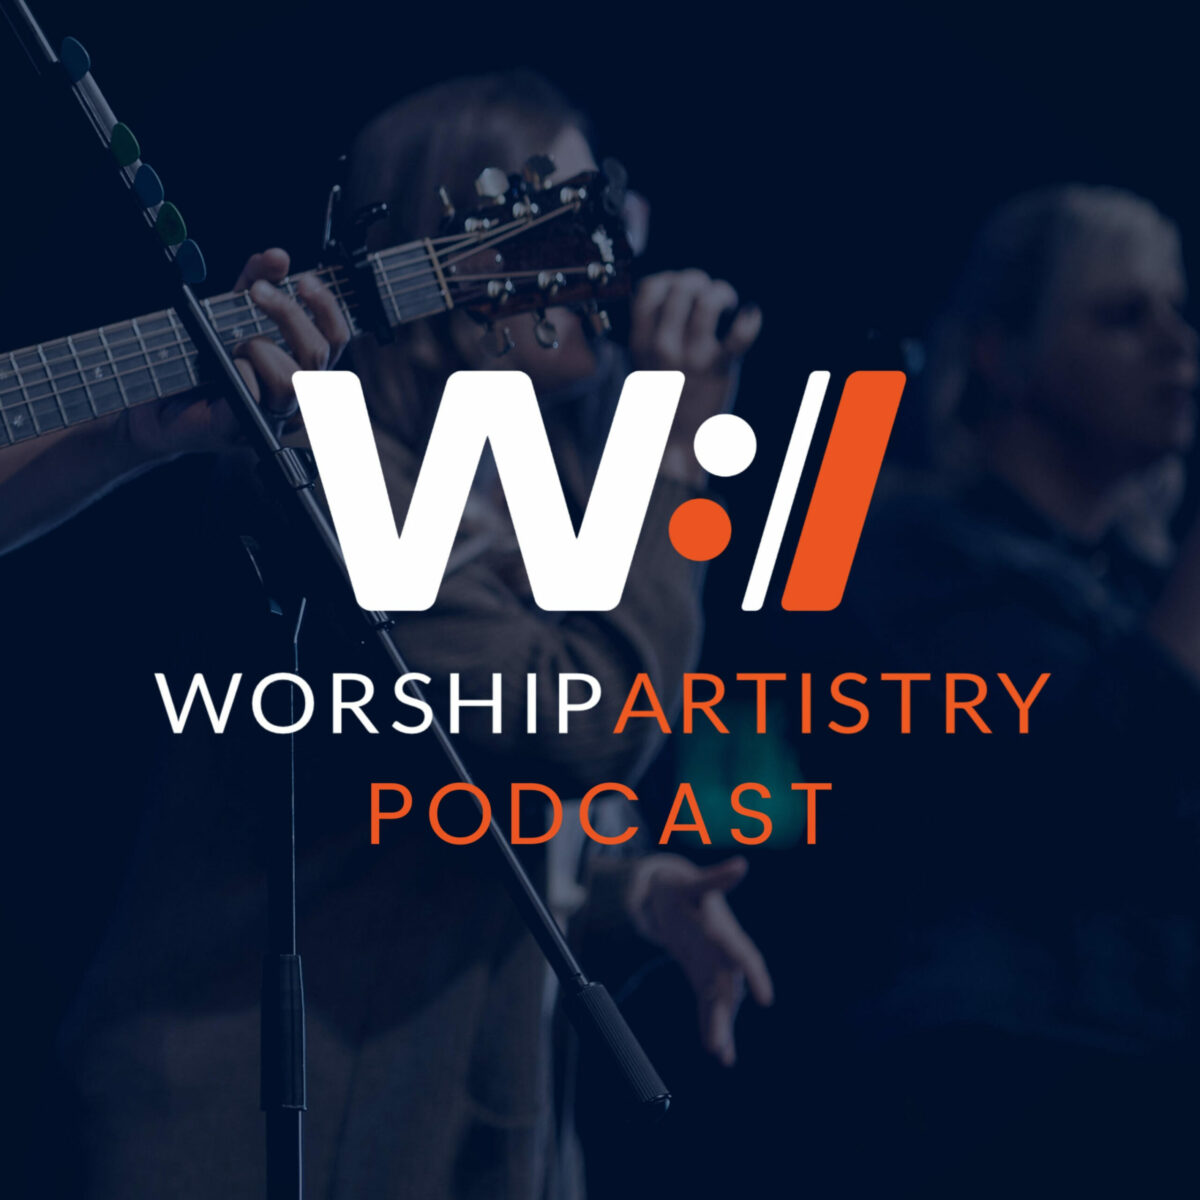 Worship Artistry Podcast Sarah Kroger on Worshiping Through Doubt